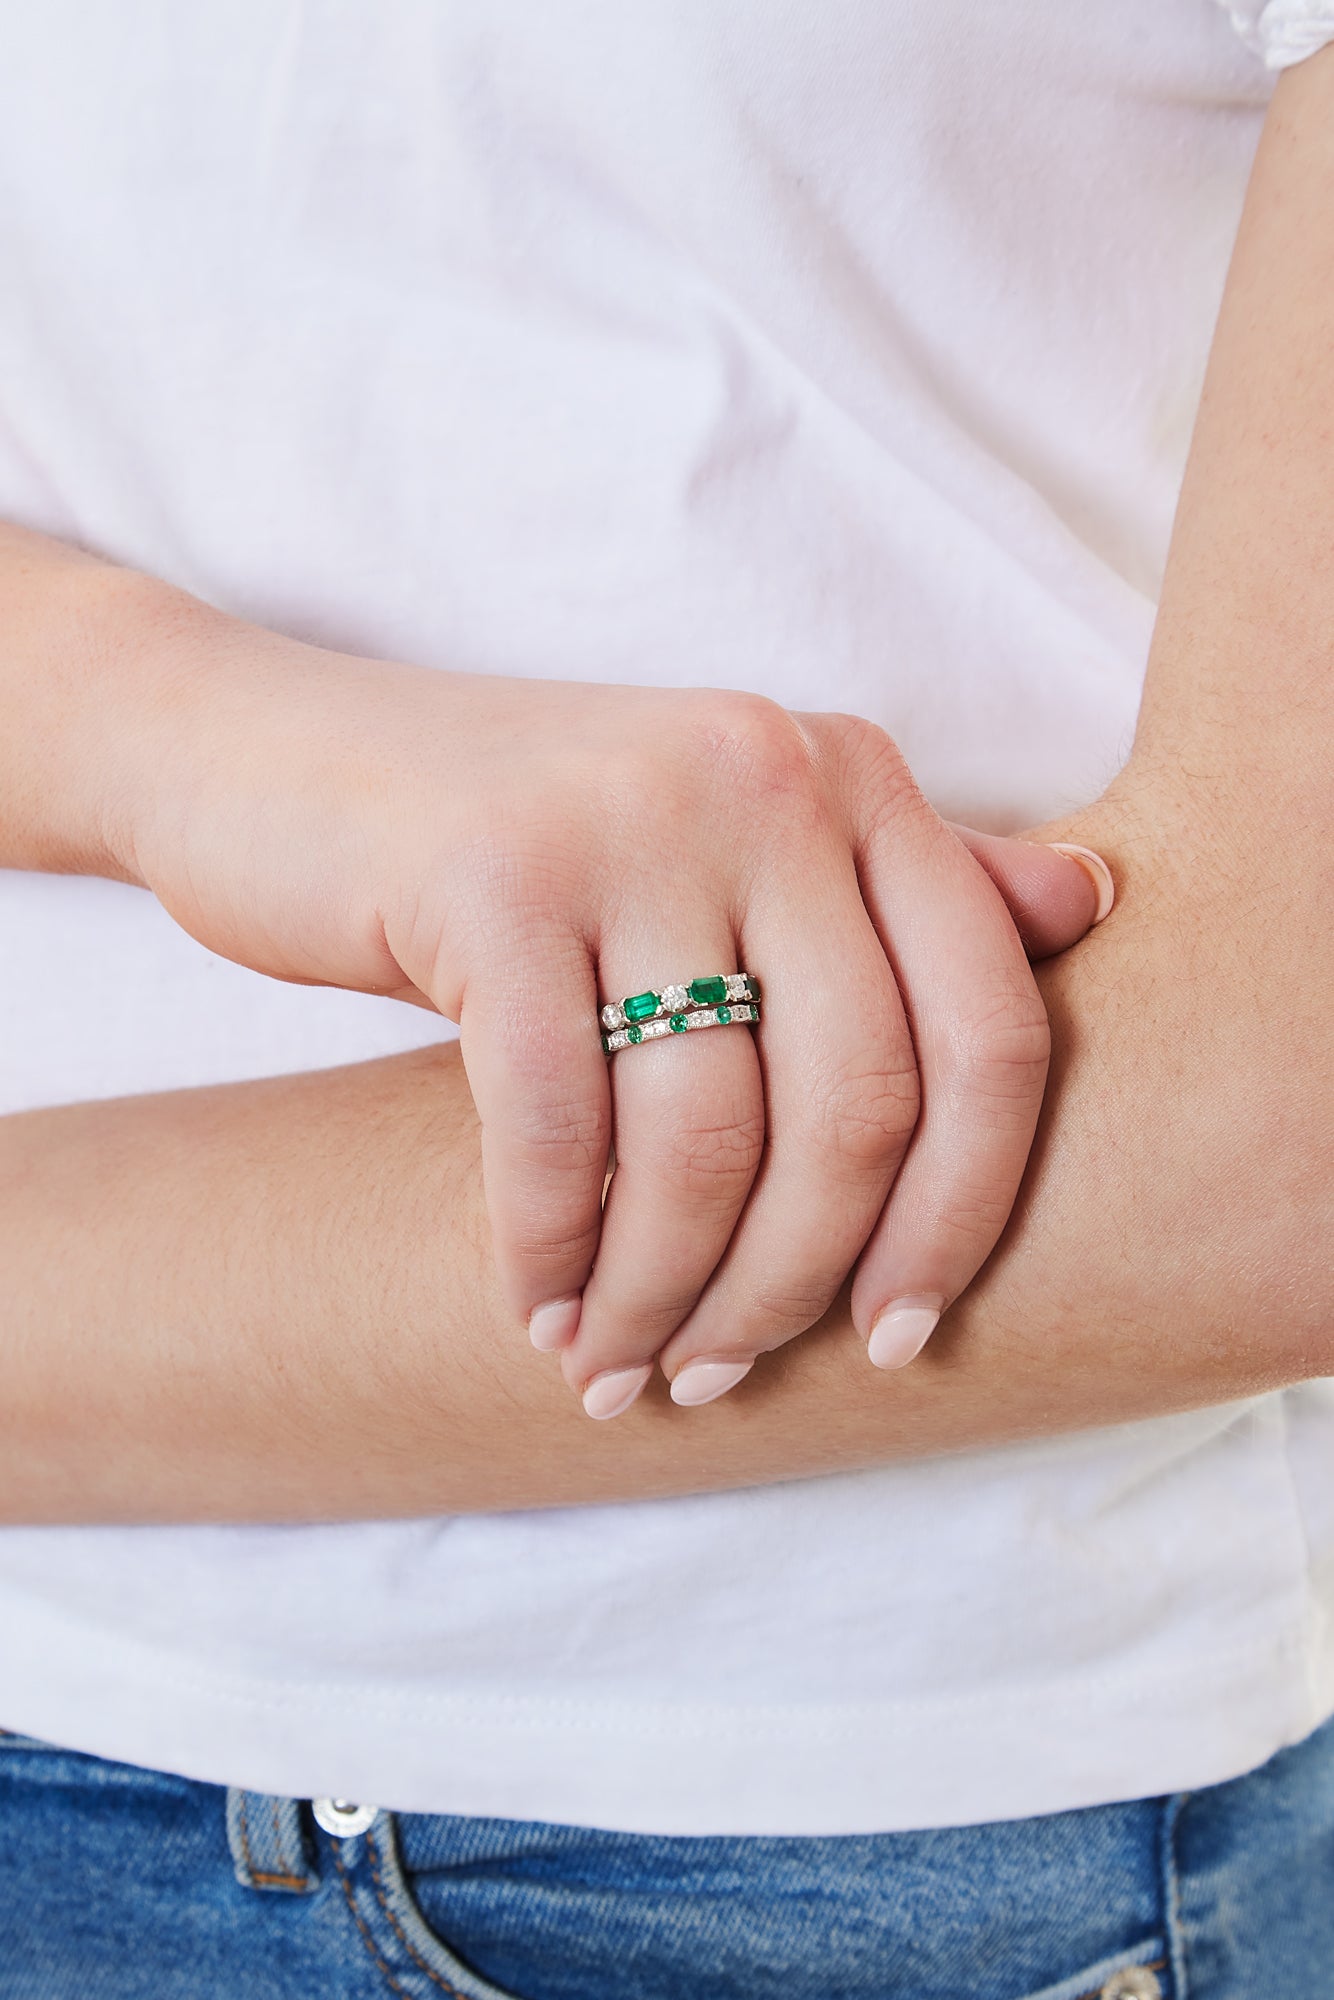 18KW Emerald Cut Emerald Ring